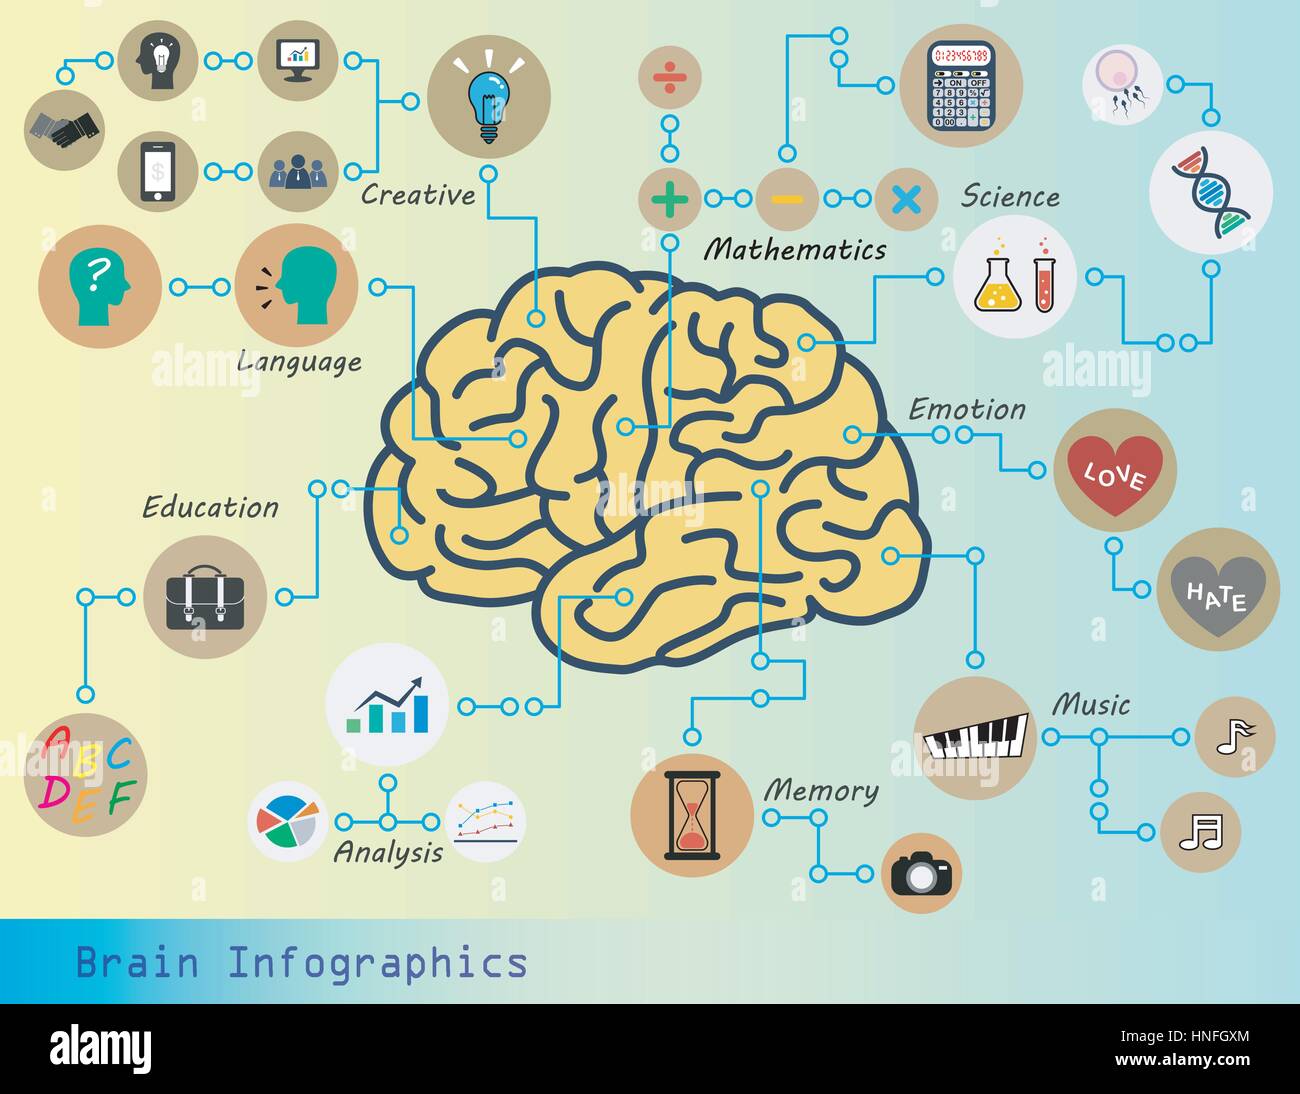 Brain Infographics (Brain function : Creative,Mathematics,Science,Emotion,Music,Memory,Analysis,Education,Language,etc.) Stock Vector